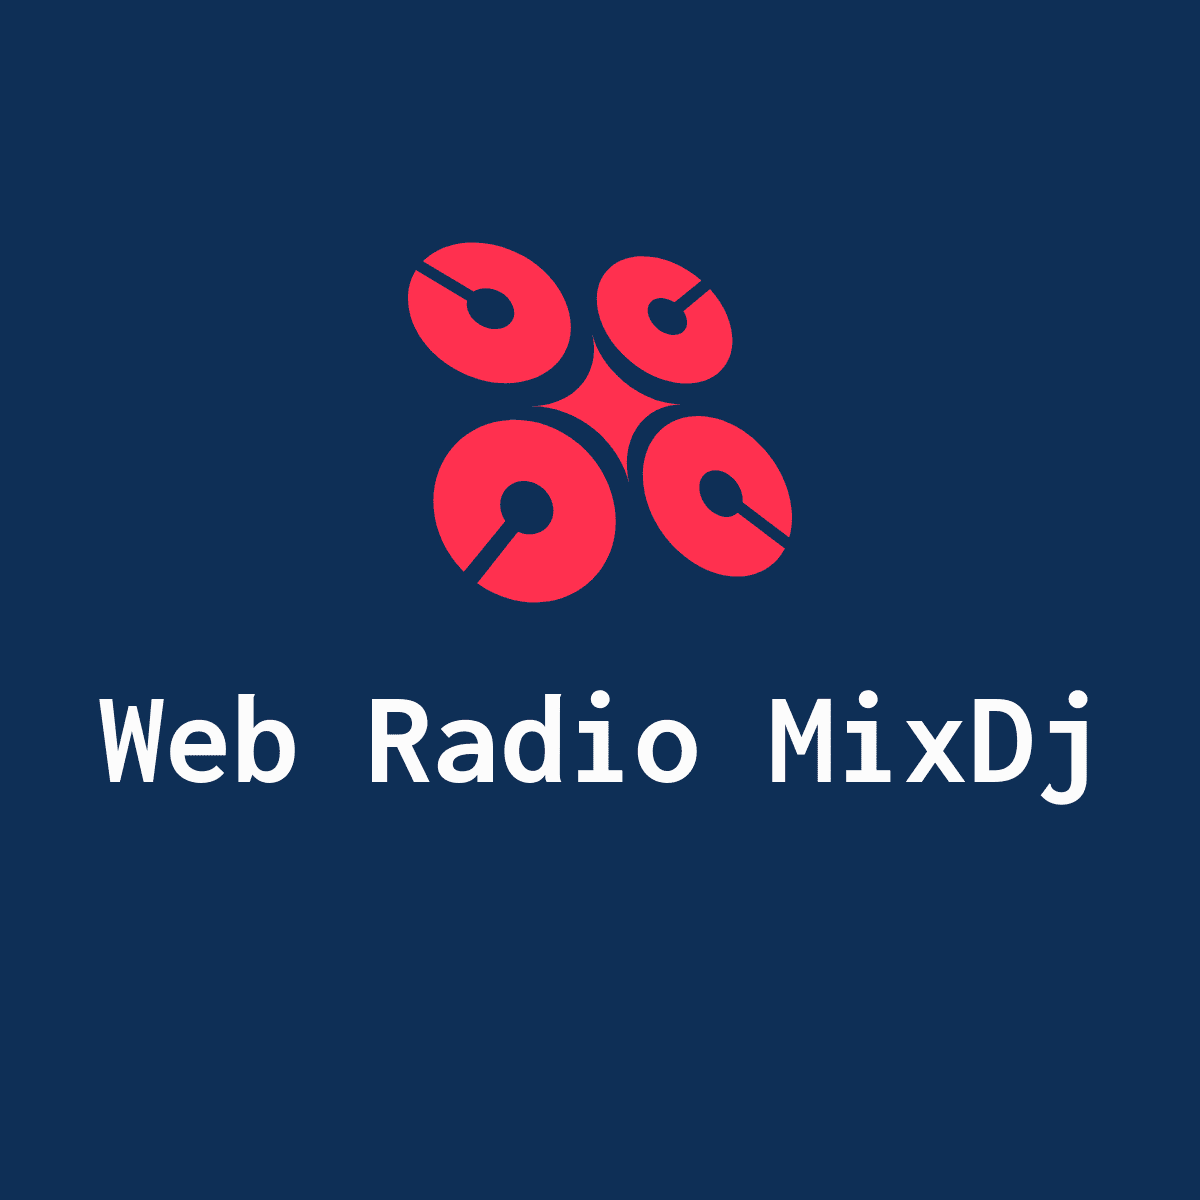 Web Radio Dj Mix